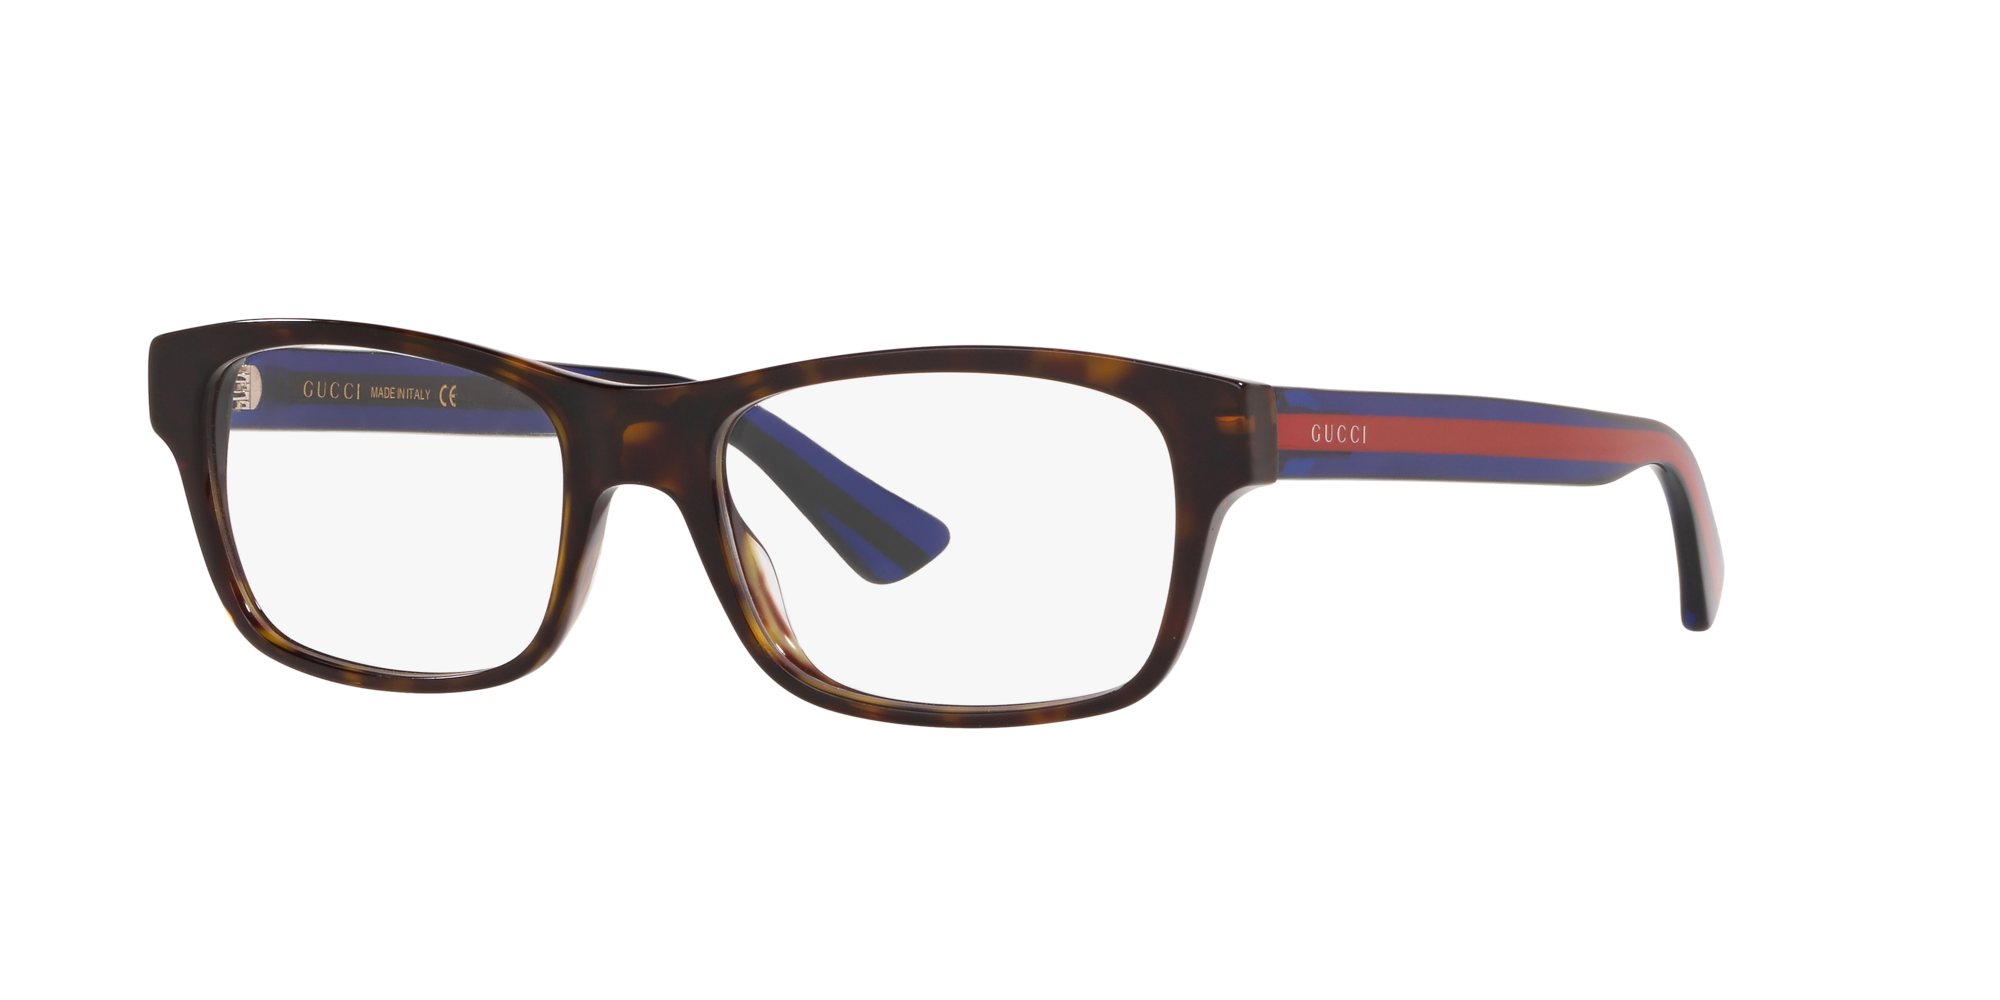 gucci eyeglasses lenscrafters